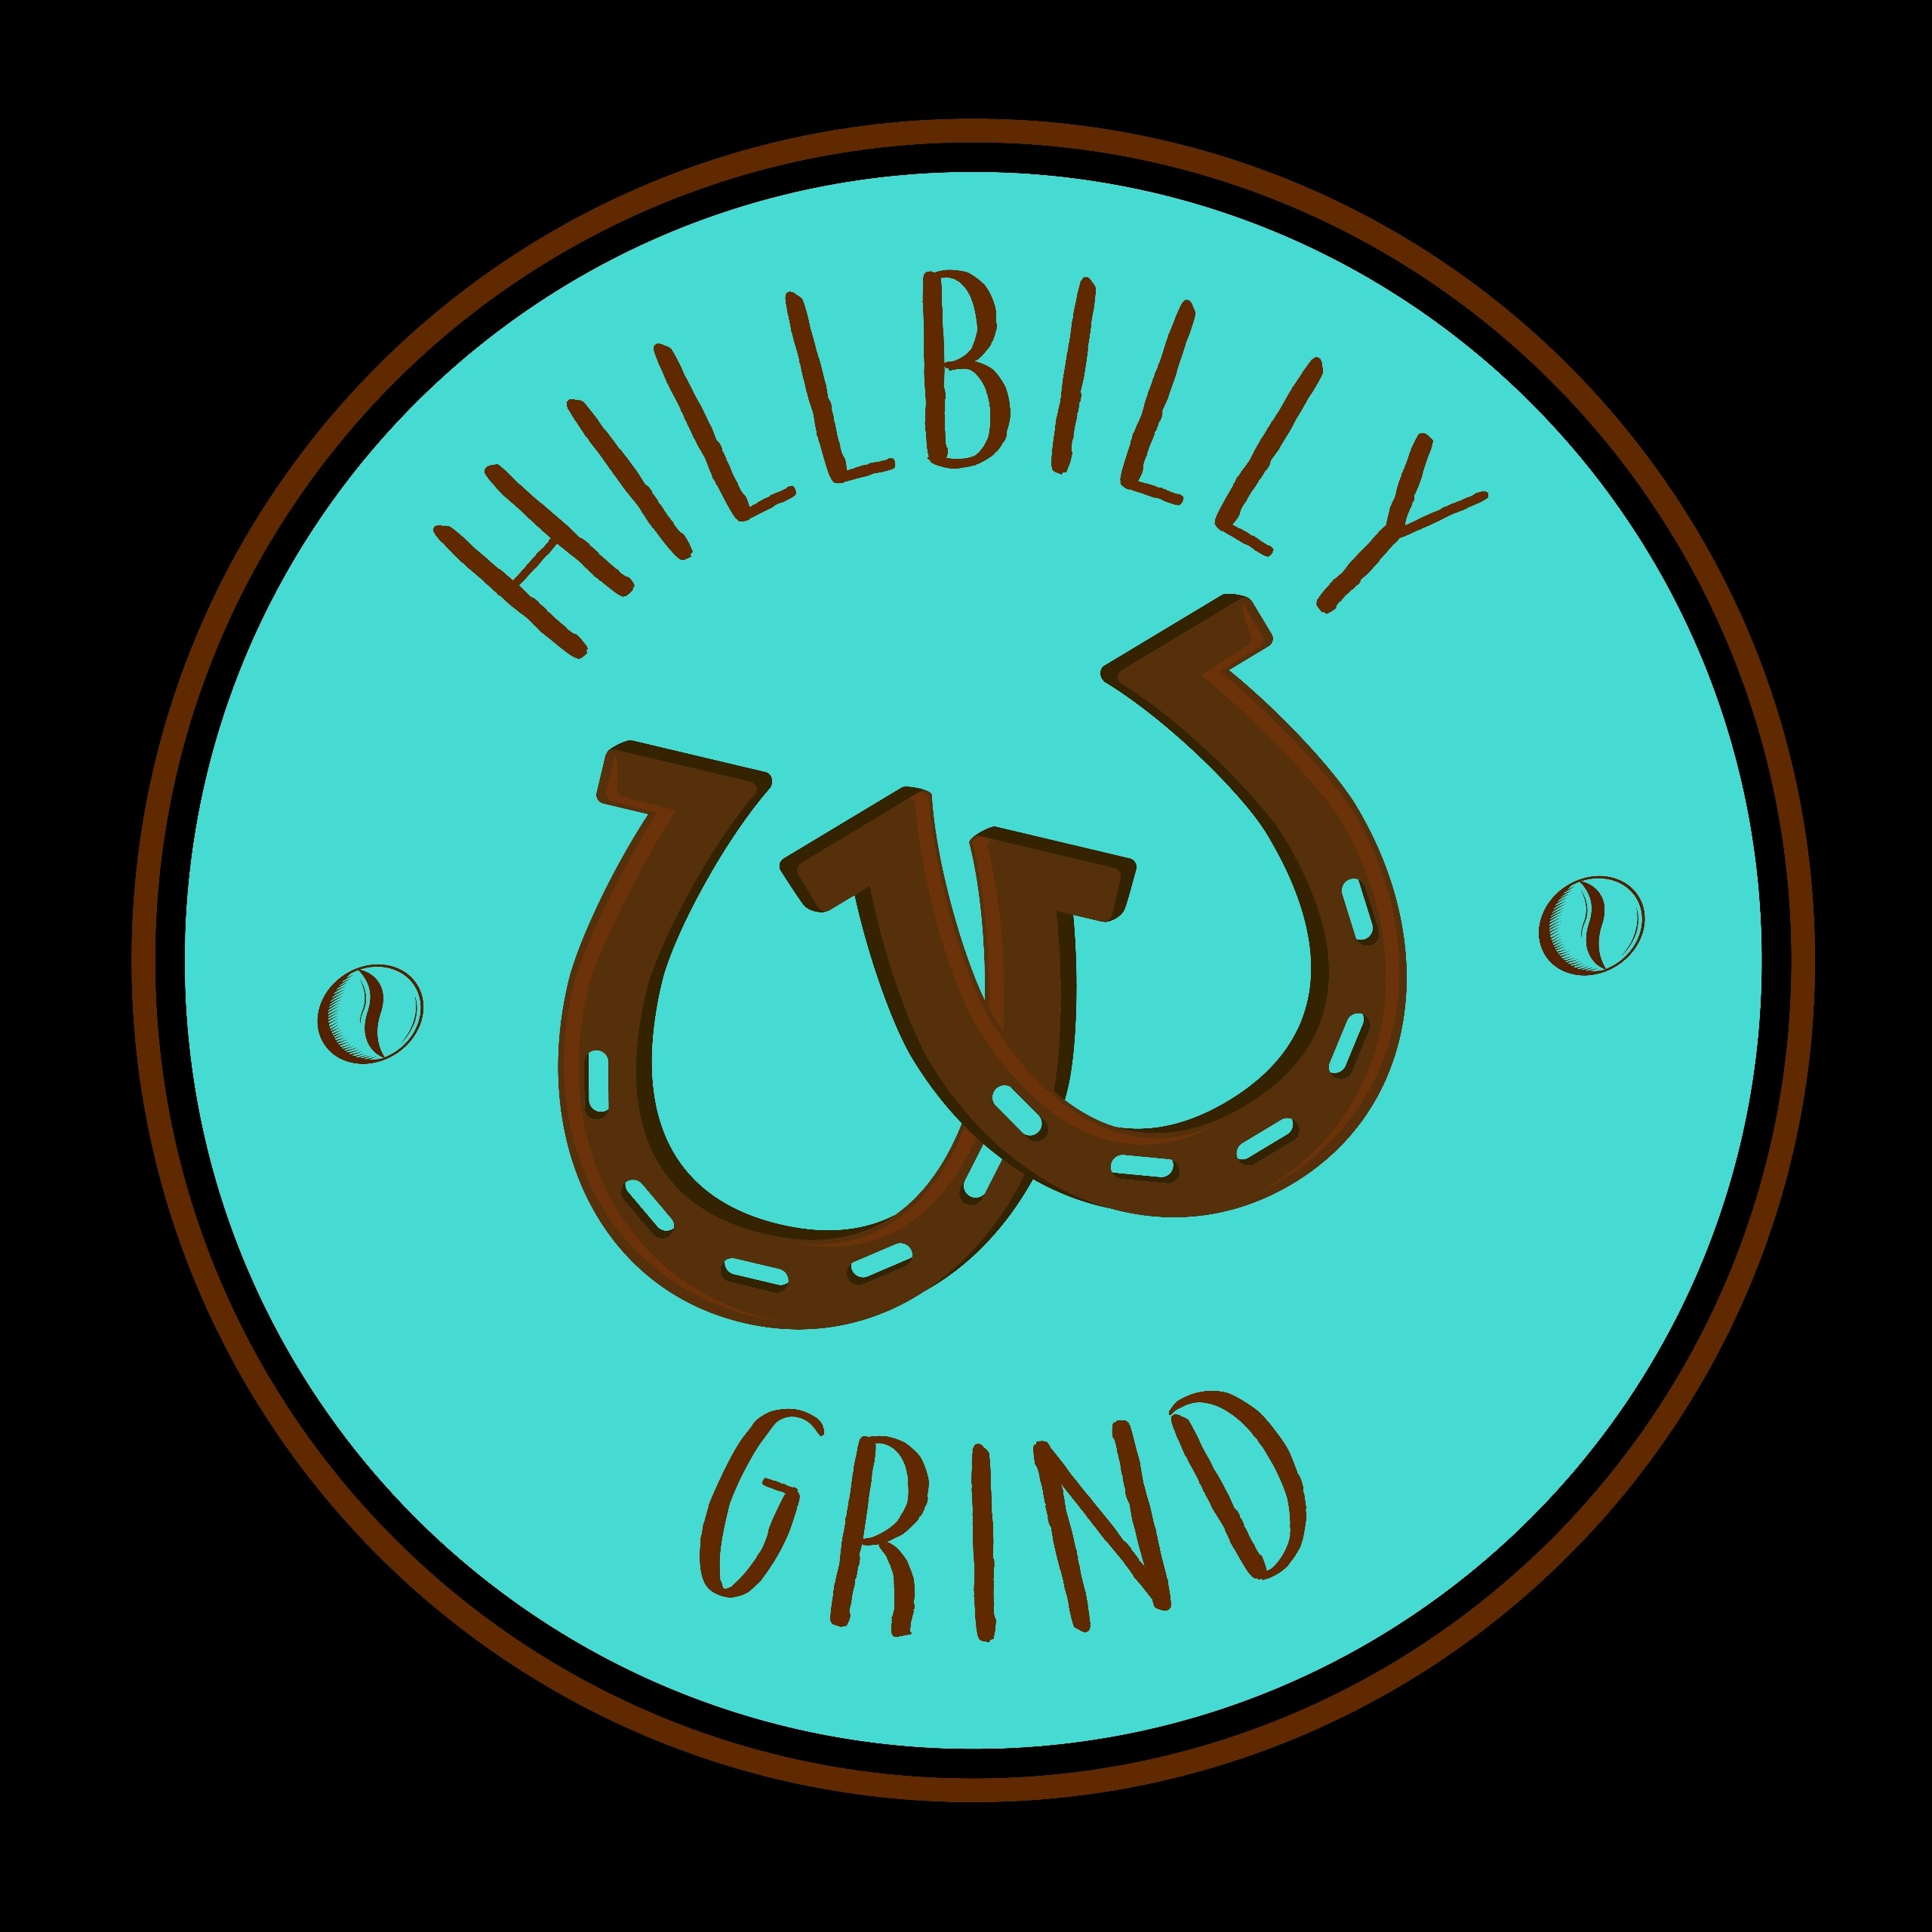 Hillbilly Grind - Trailer 1 4701 West Dobbins Rd. Laveen, AZ 